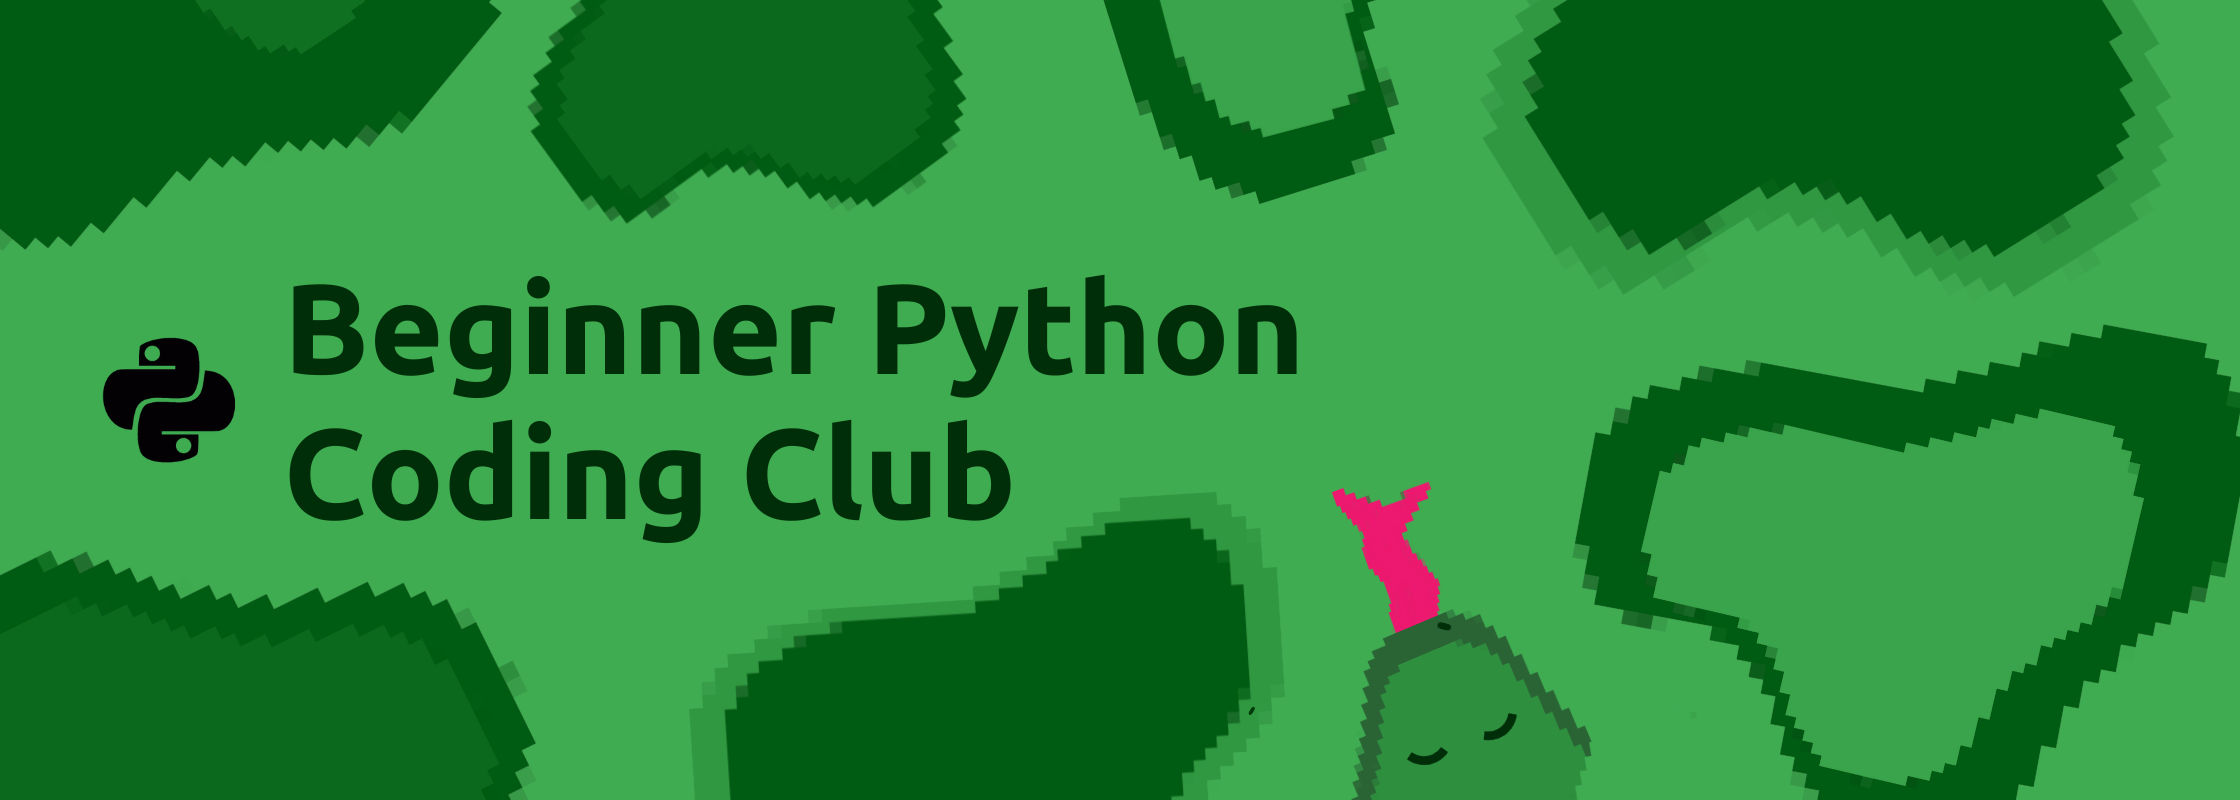 Banner for Beginner Python Coding Club